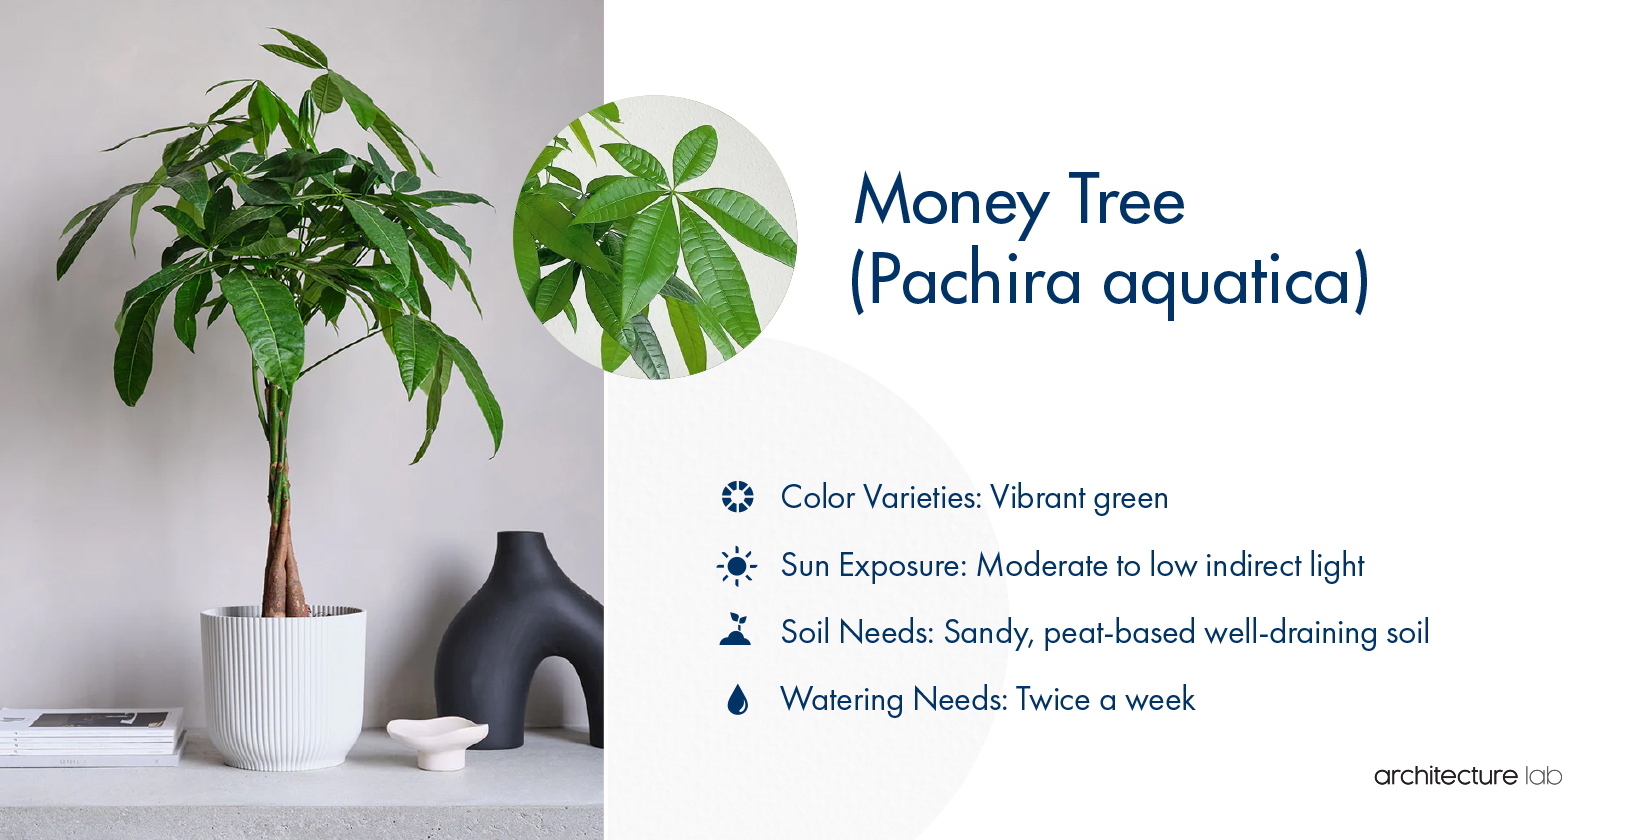 33. Money tree (pachira aquatica)